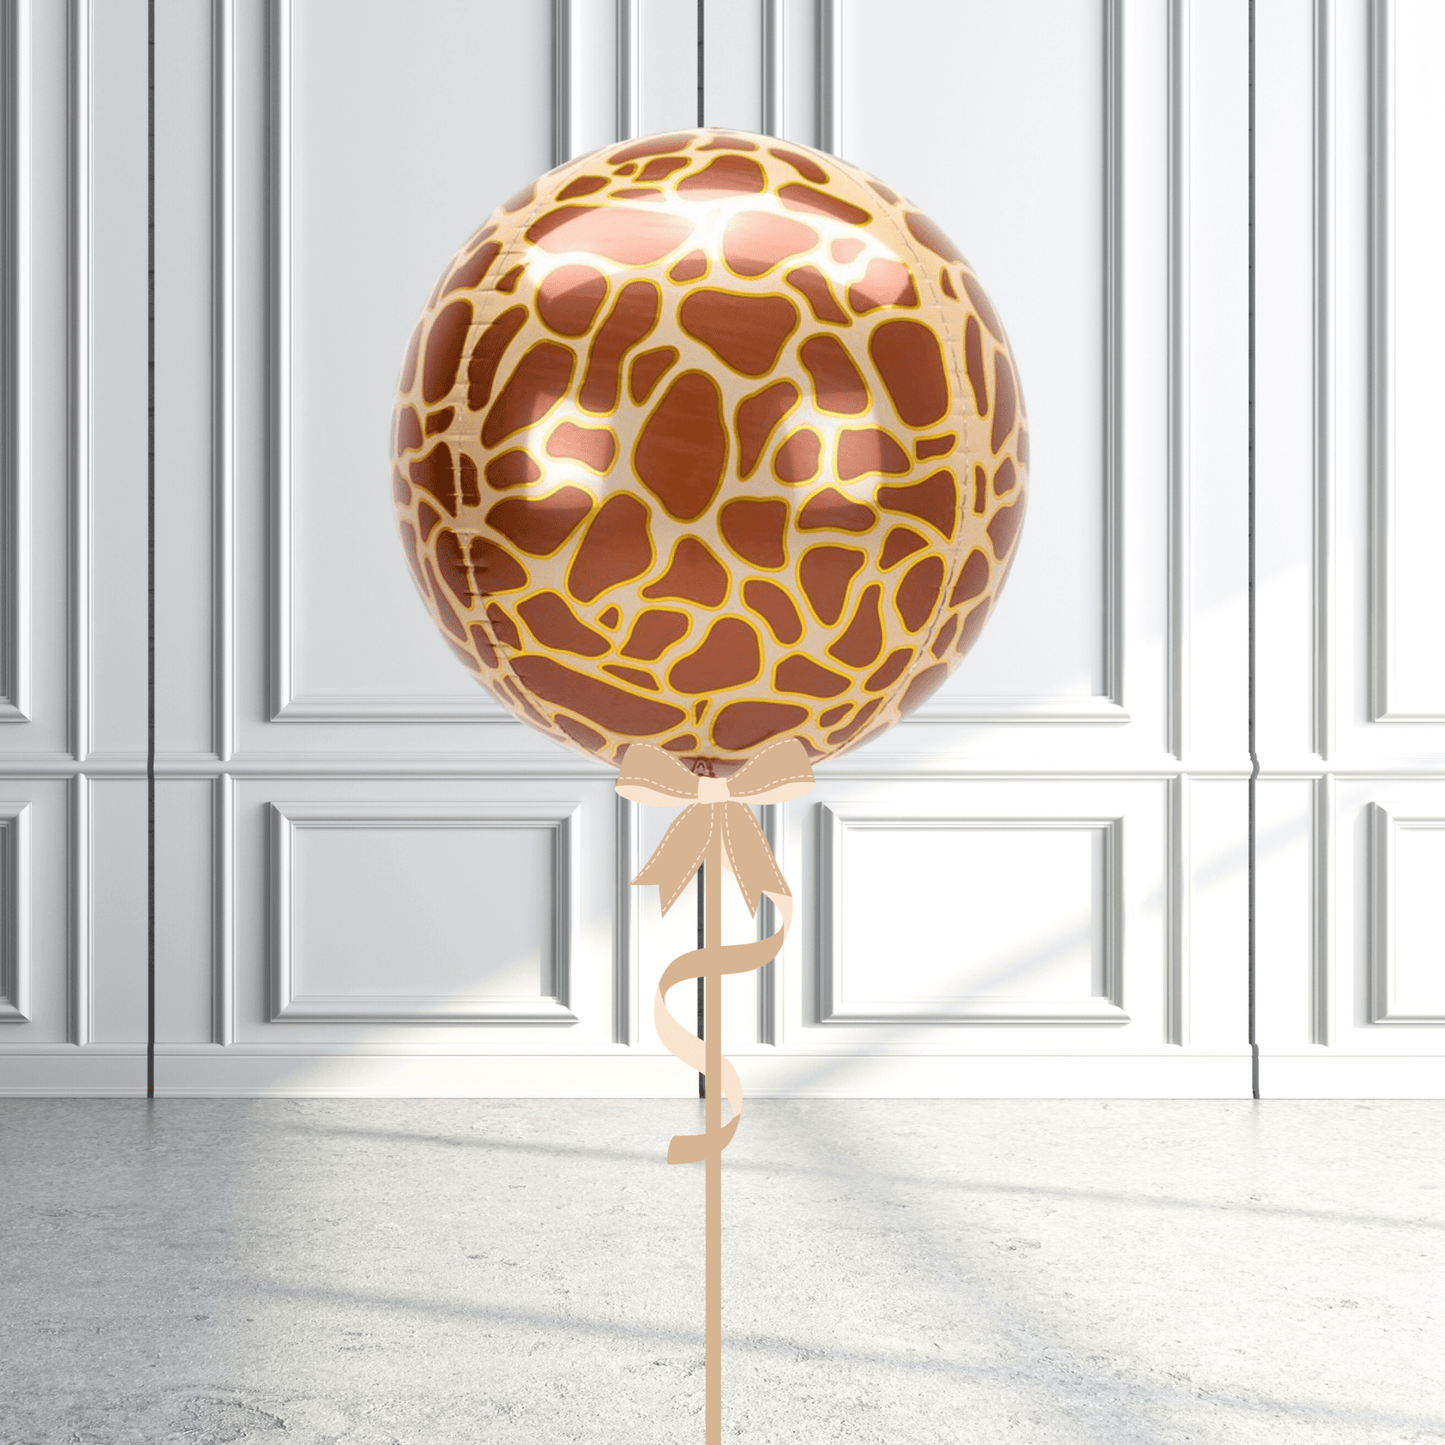 Orbz ballong - giraffe